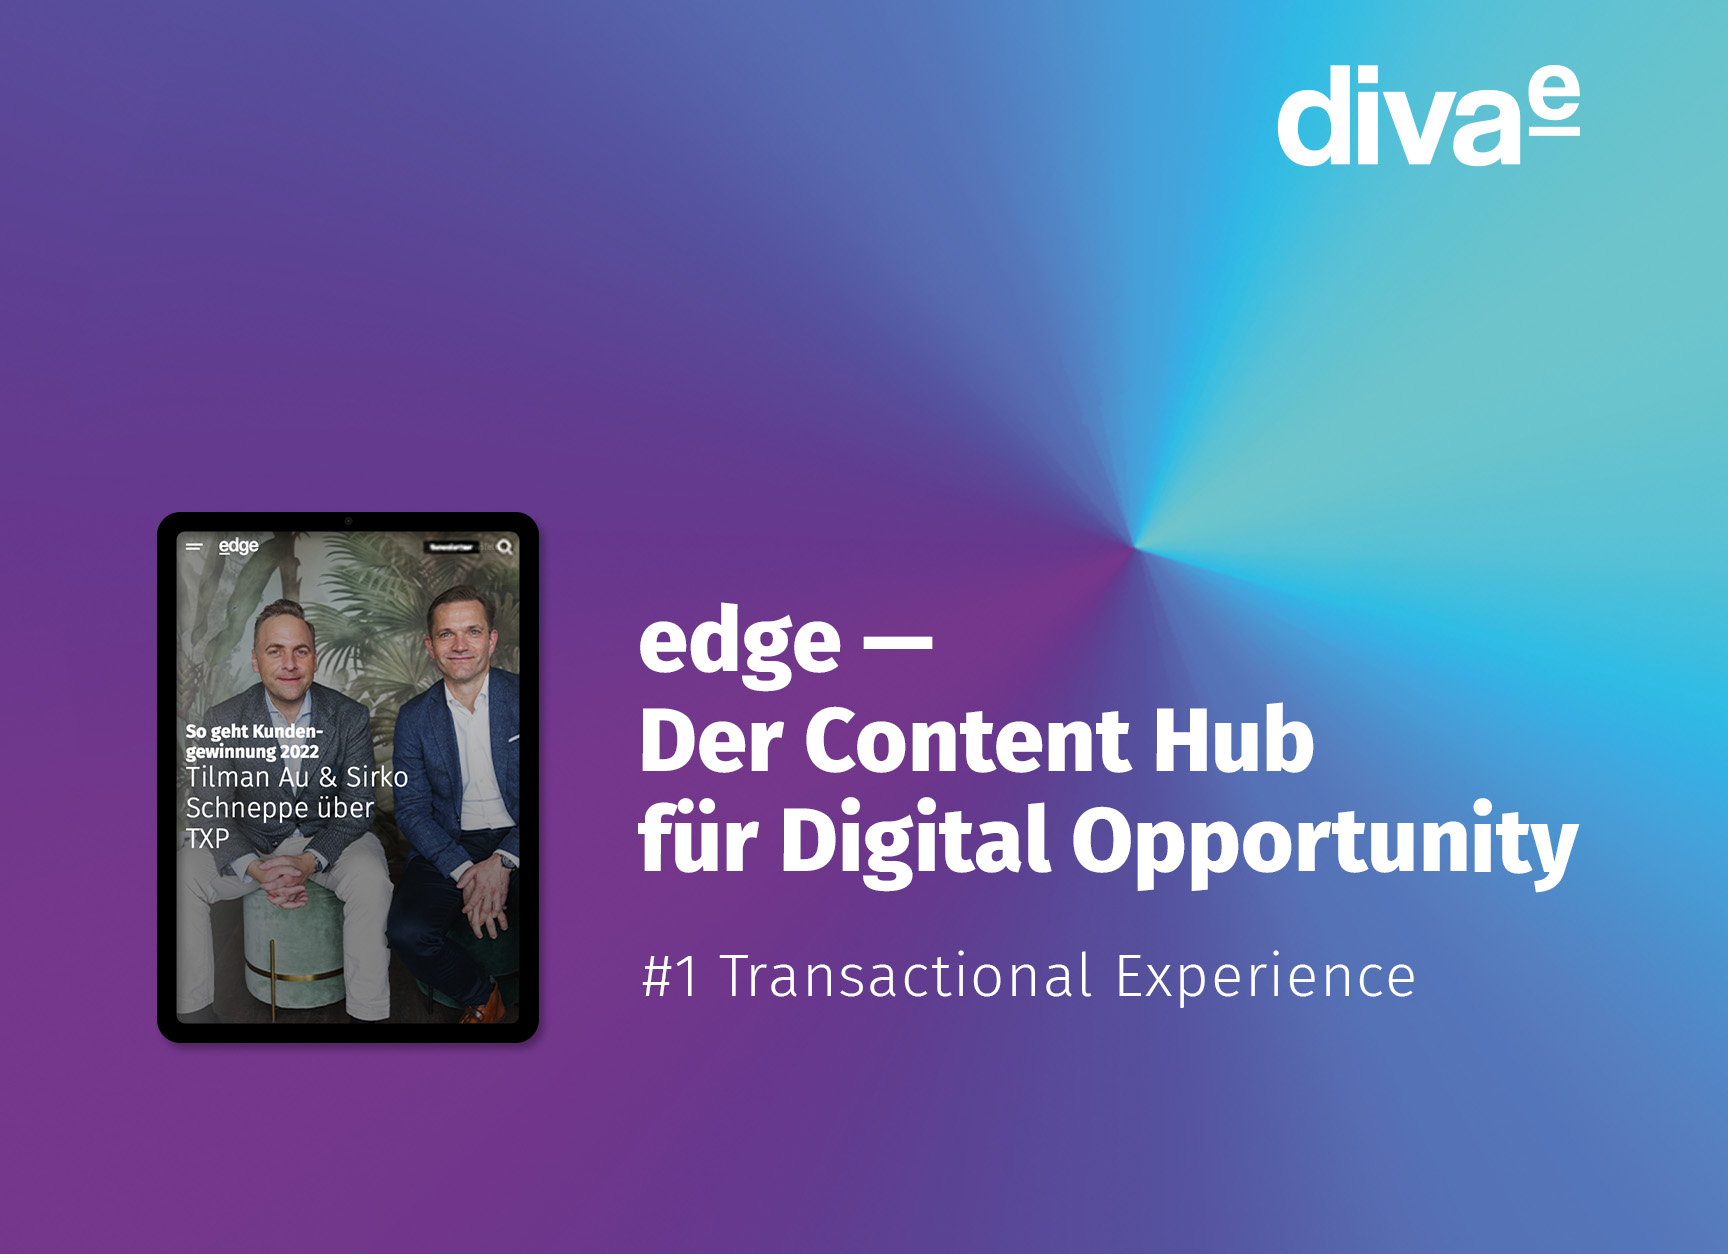 Over the “edge”: diva-e launches e-magazine on current digital trends